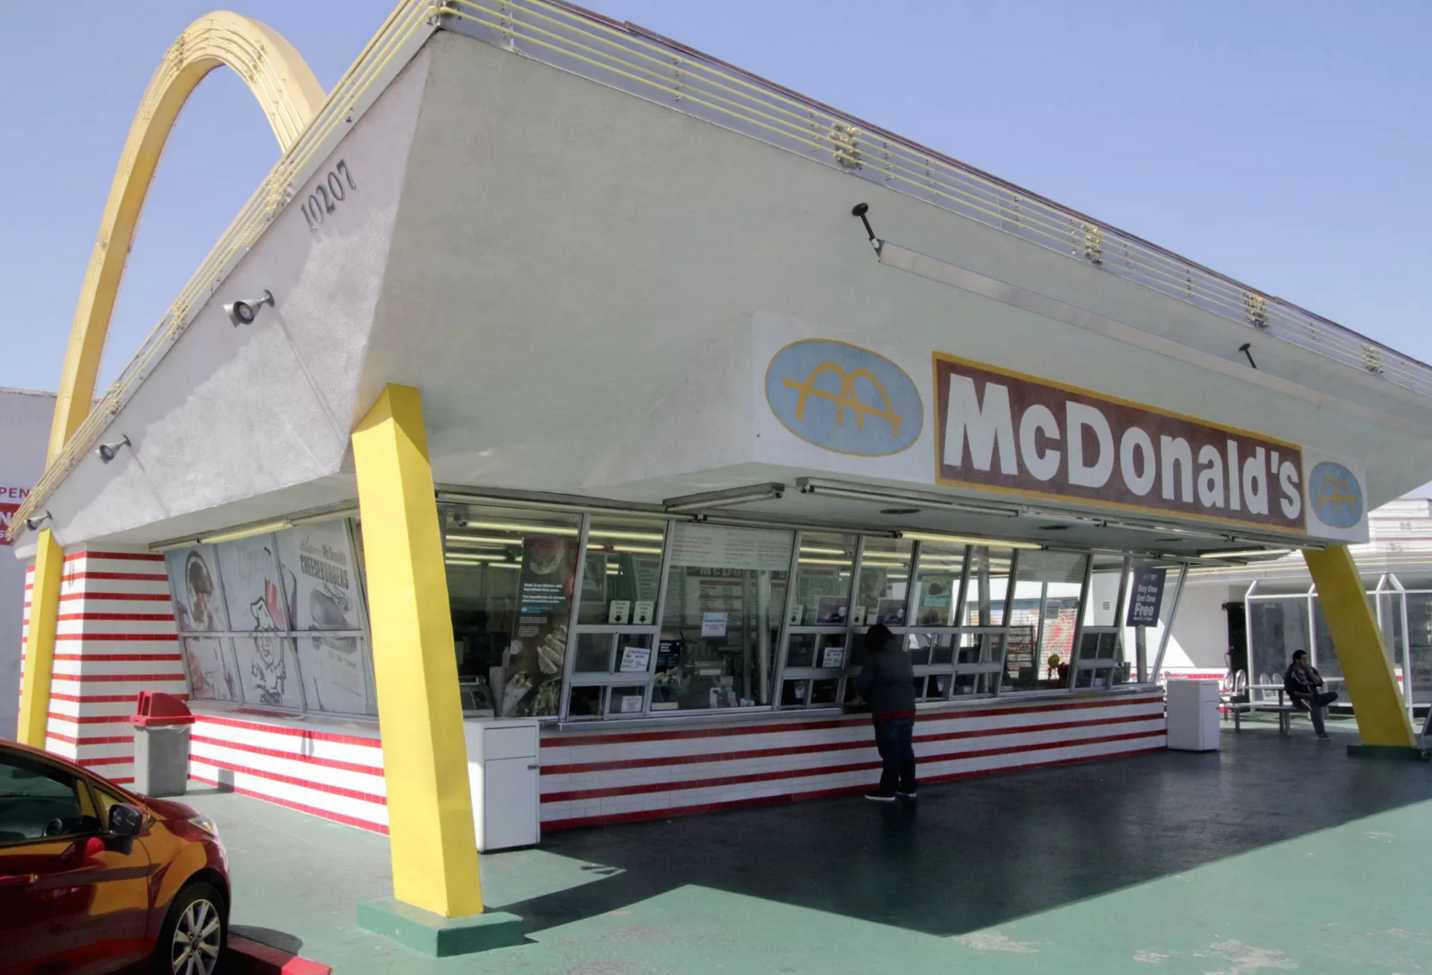 The oldest McDonald's, Downey